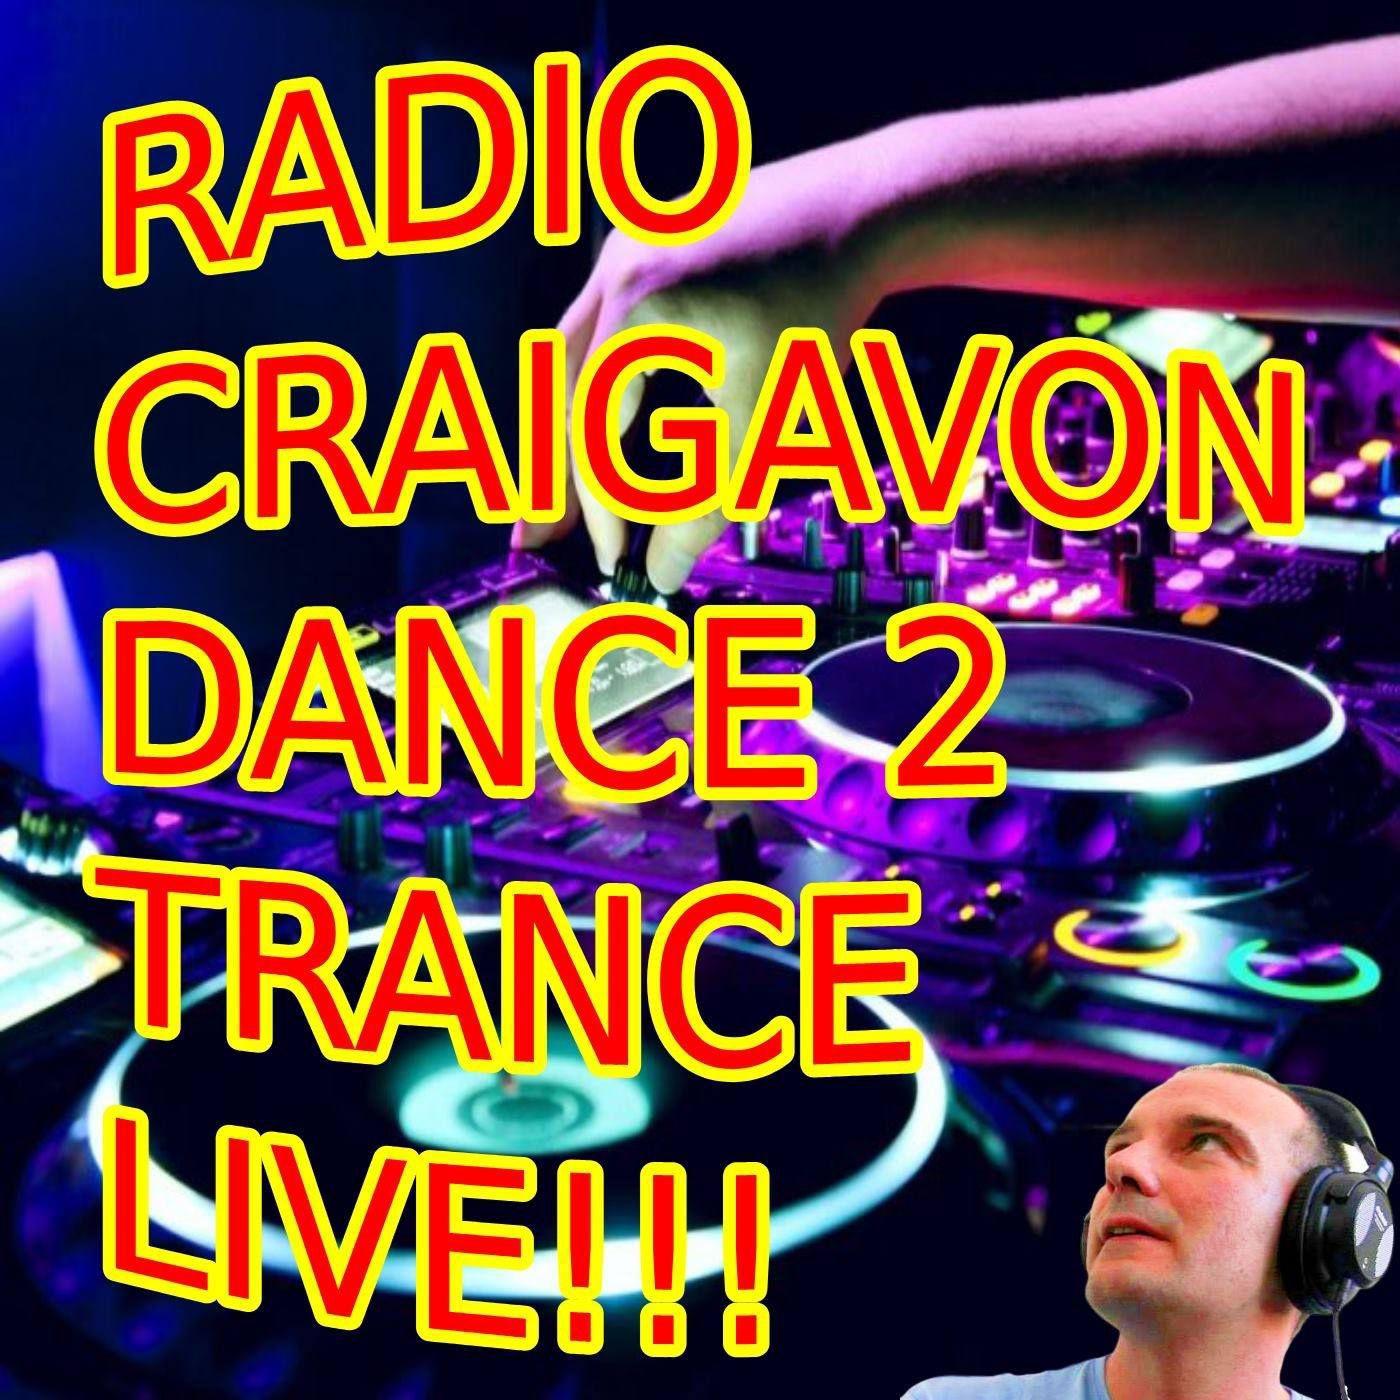 Radio Craigavon Dance 2 Trance LIVE!!!